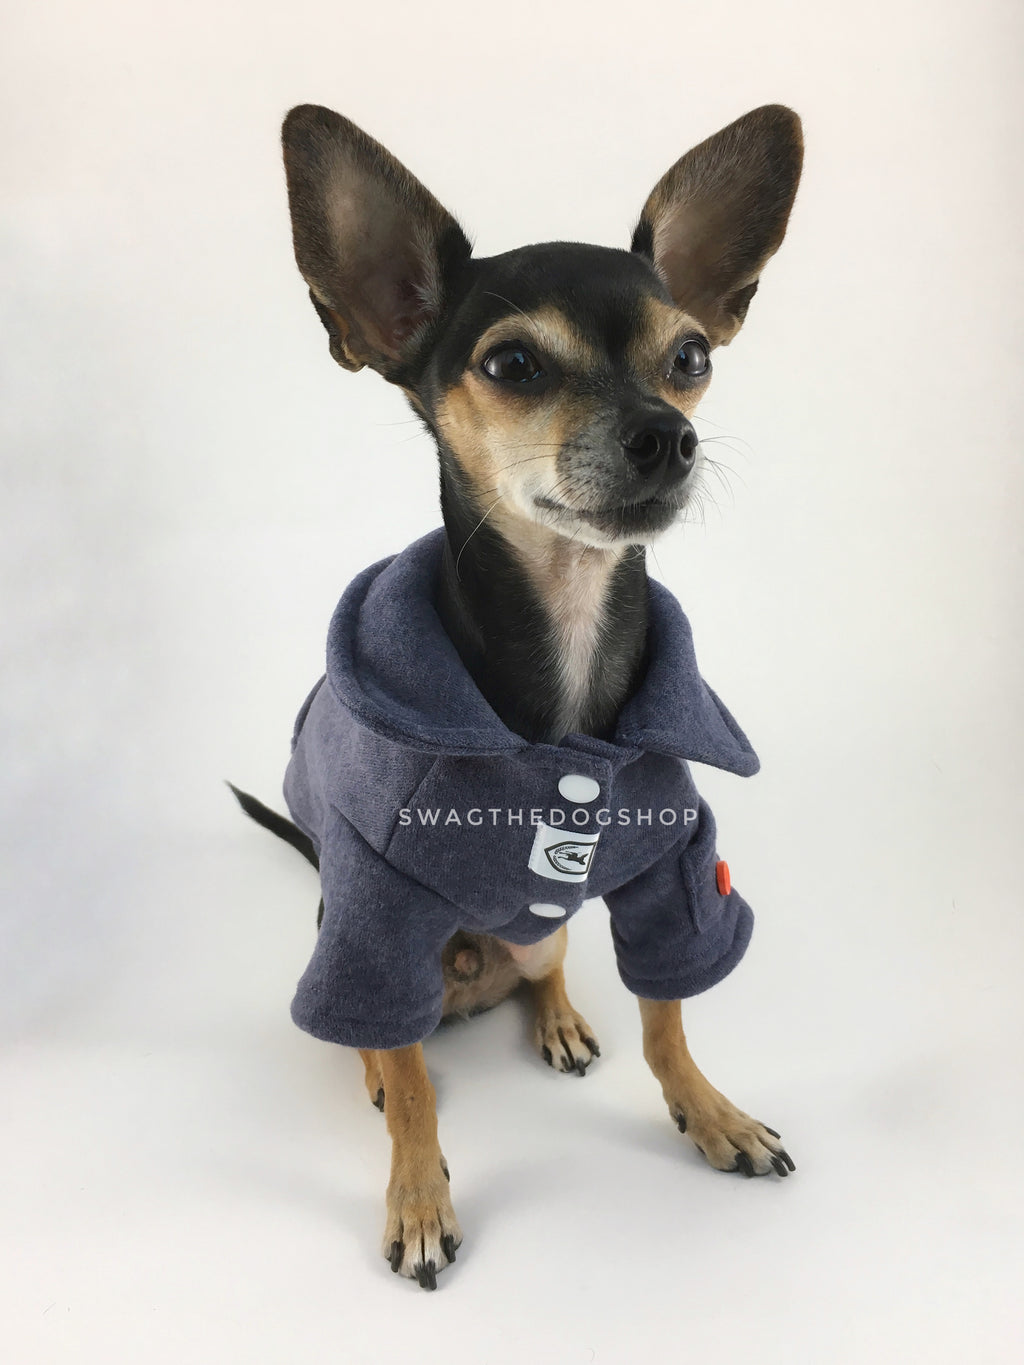 Yachtsman Navy Shirt - Full Front View of Cute Chihuahua Dog Wearing Shirt. Navy Shirt with Fleece Inside